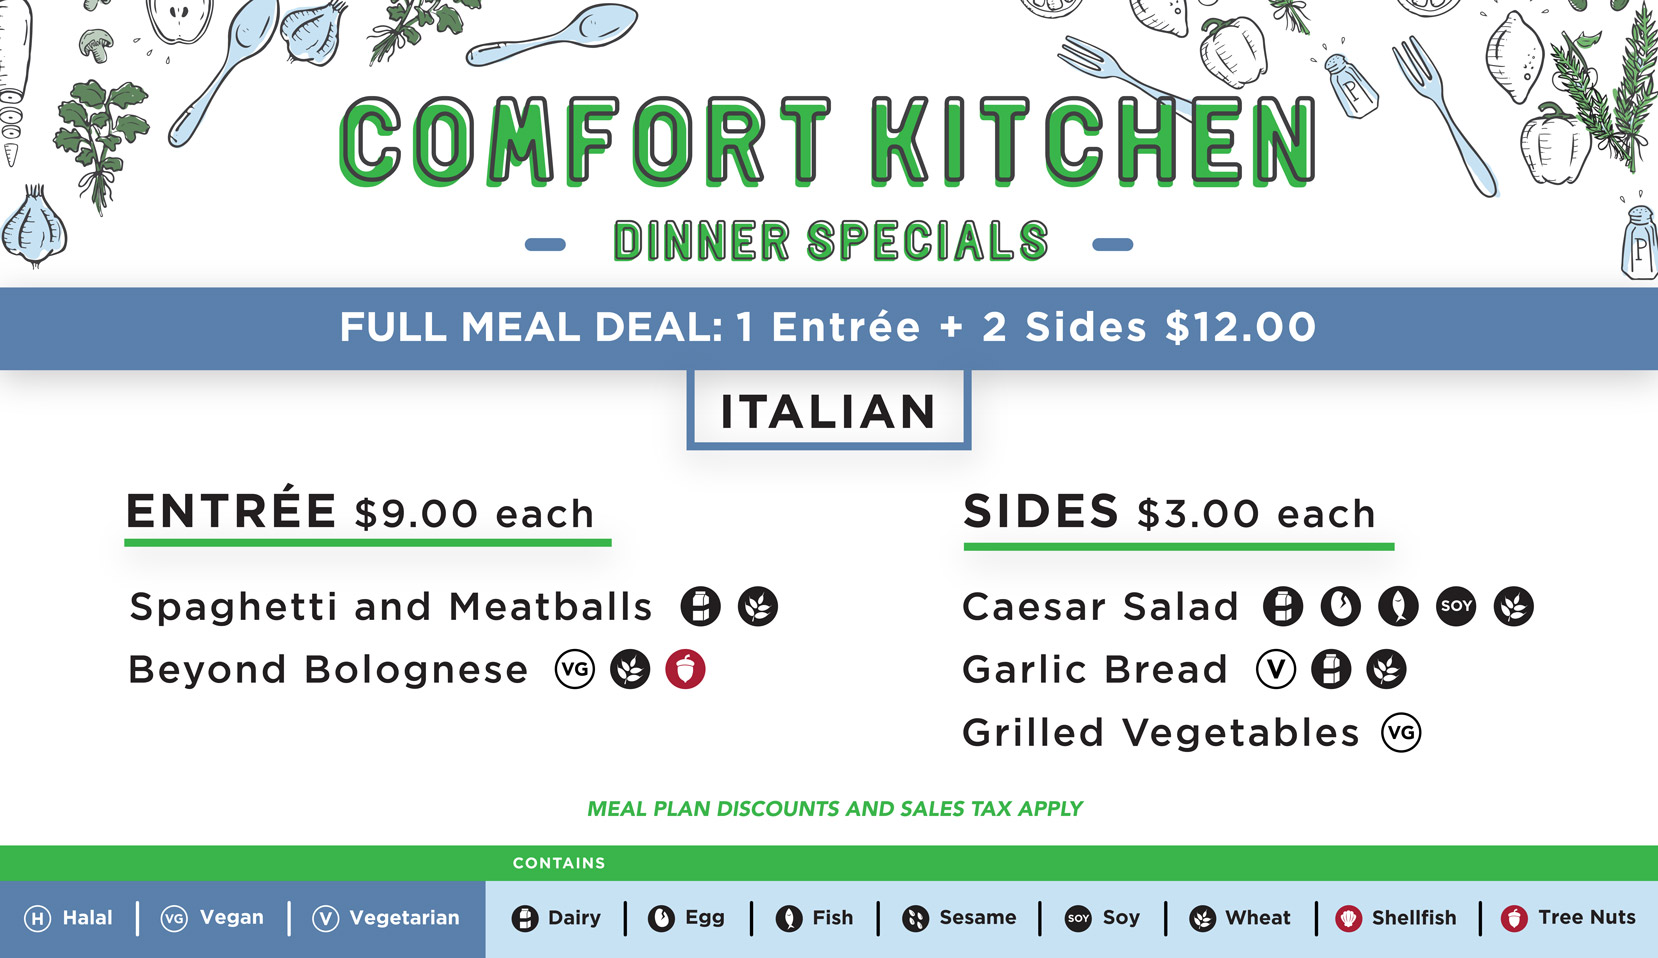 Comfort Kitchen Italian Menu